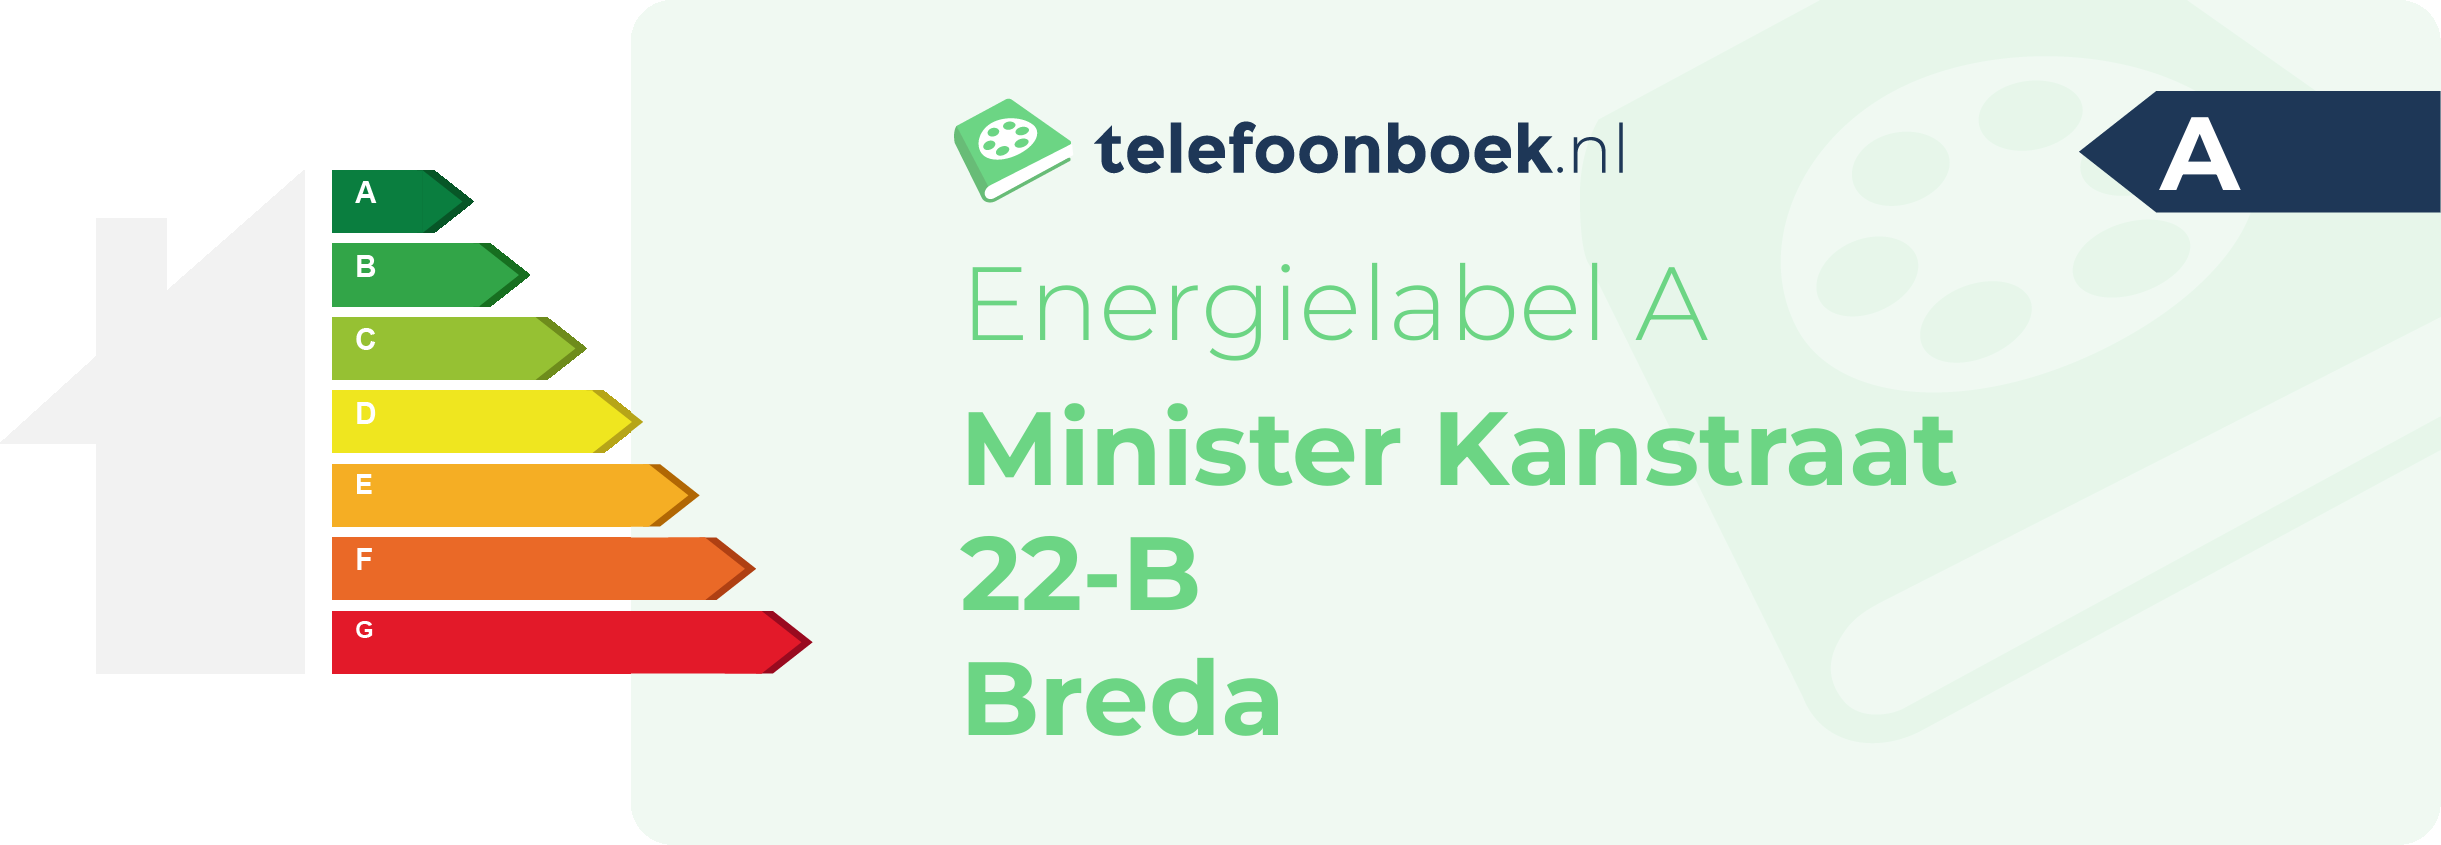 Energielabel Minister Kanstraat 22-B Breda